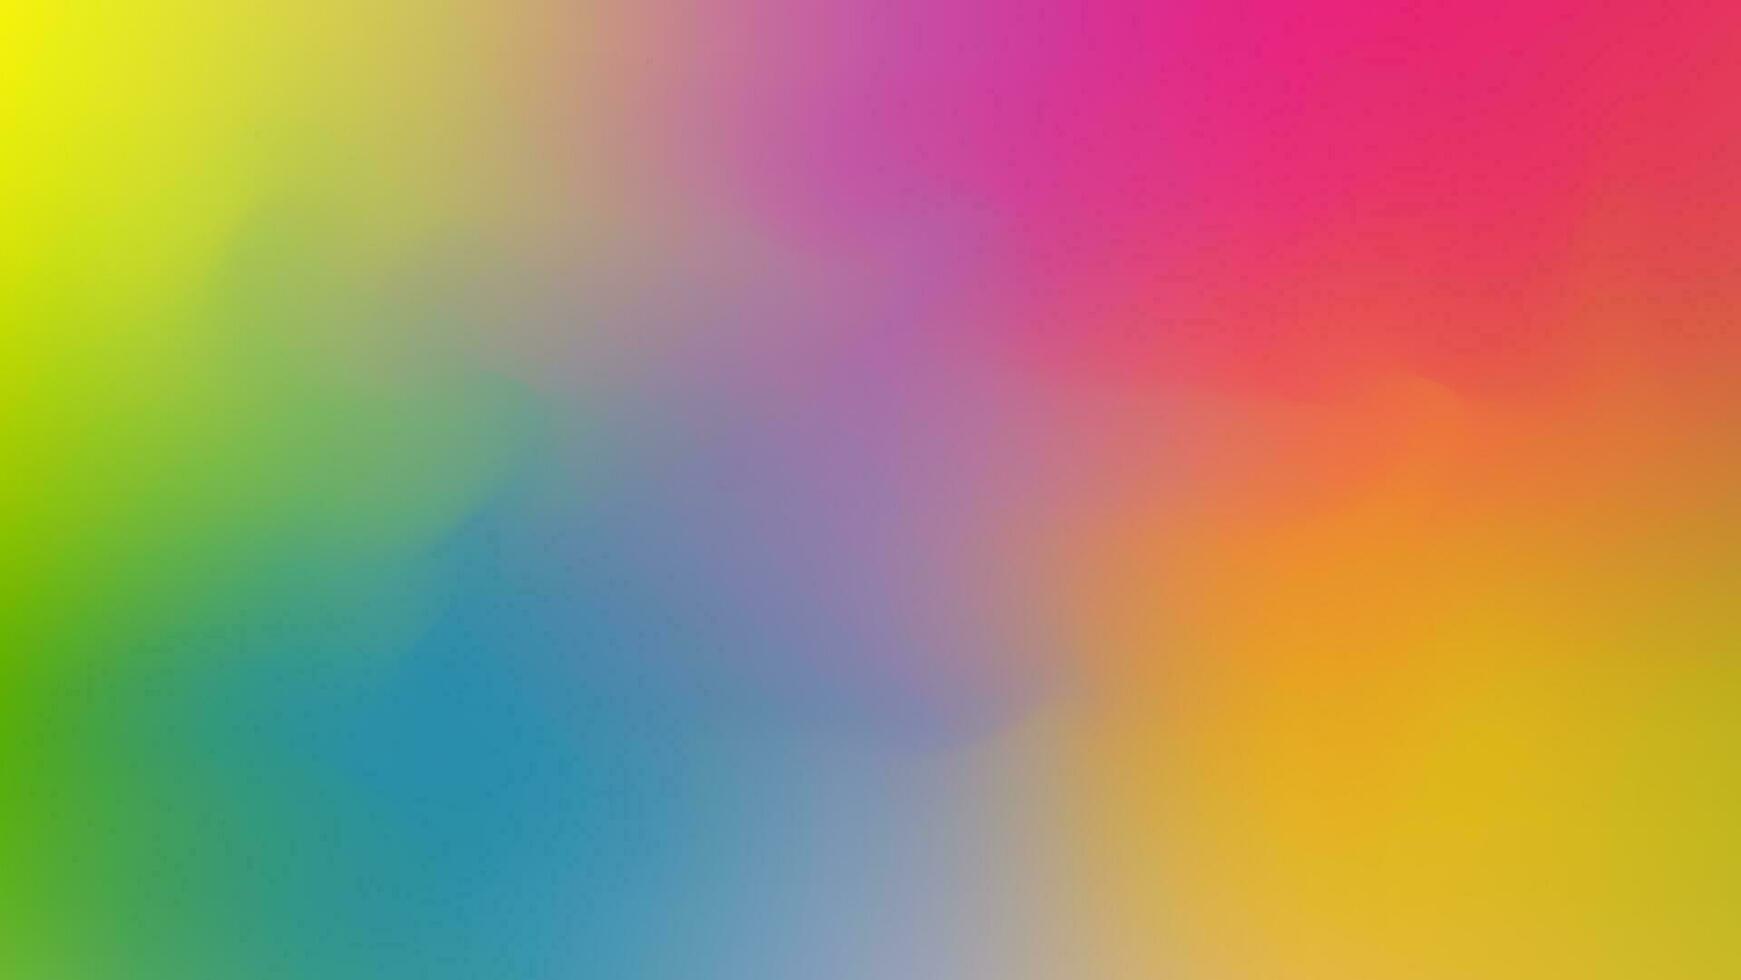 abstrato suave borrão colorida malha gradiente efeito fundo para gráfico Projeto elemento vetor